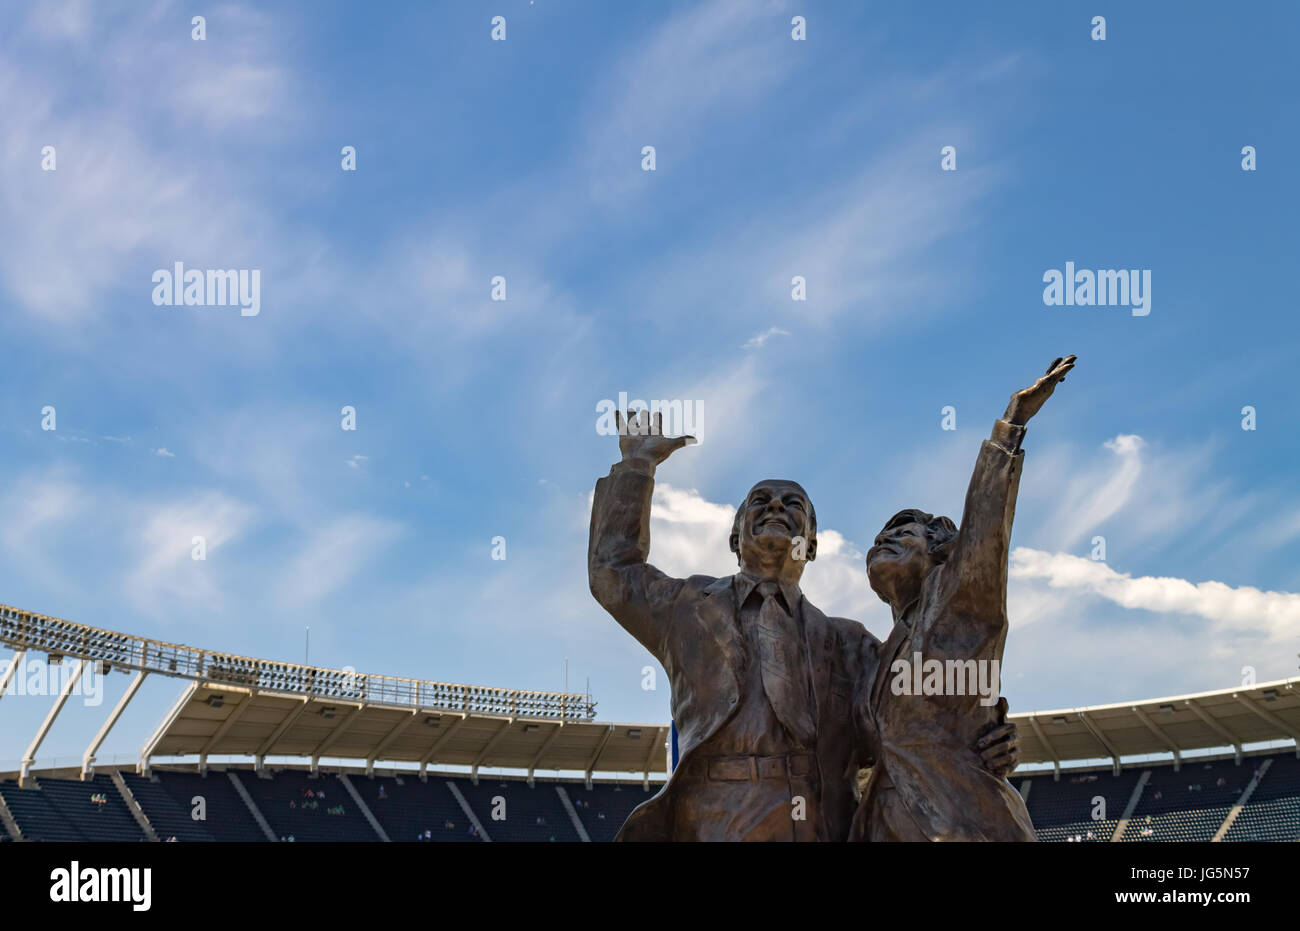 Kansas City, Missouri negli Stati Uniti- 6/26/2017 Ewing Marion Kauffman e Muriel irene Kauffman statua in bronzo presso Kauffman Stadium Foto Stock